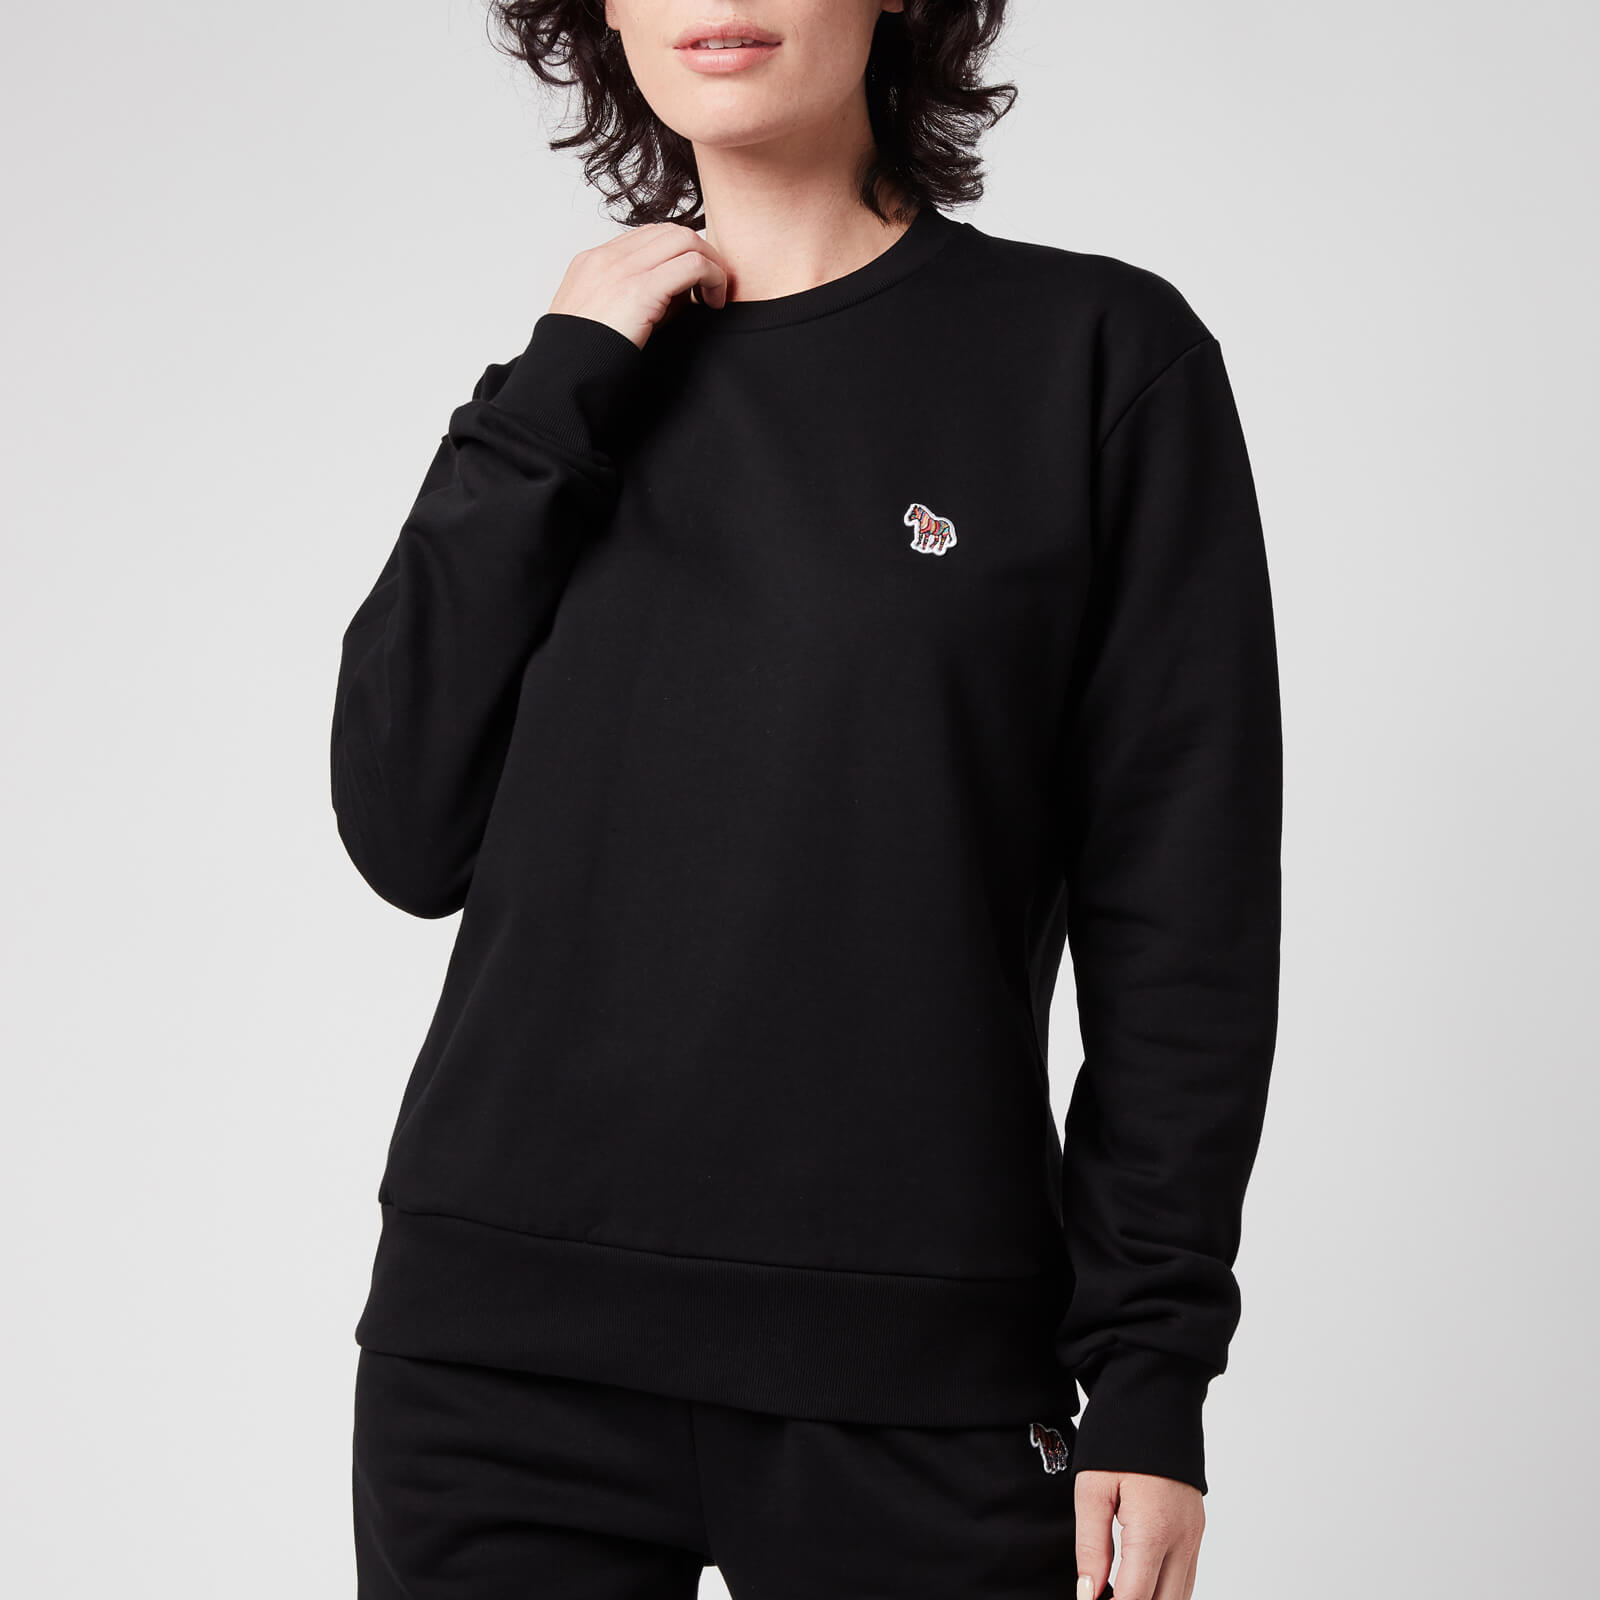 PS Paul Smith Women's Zebra Sweatshirt - Black - XS